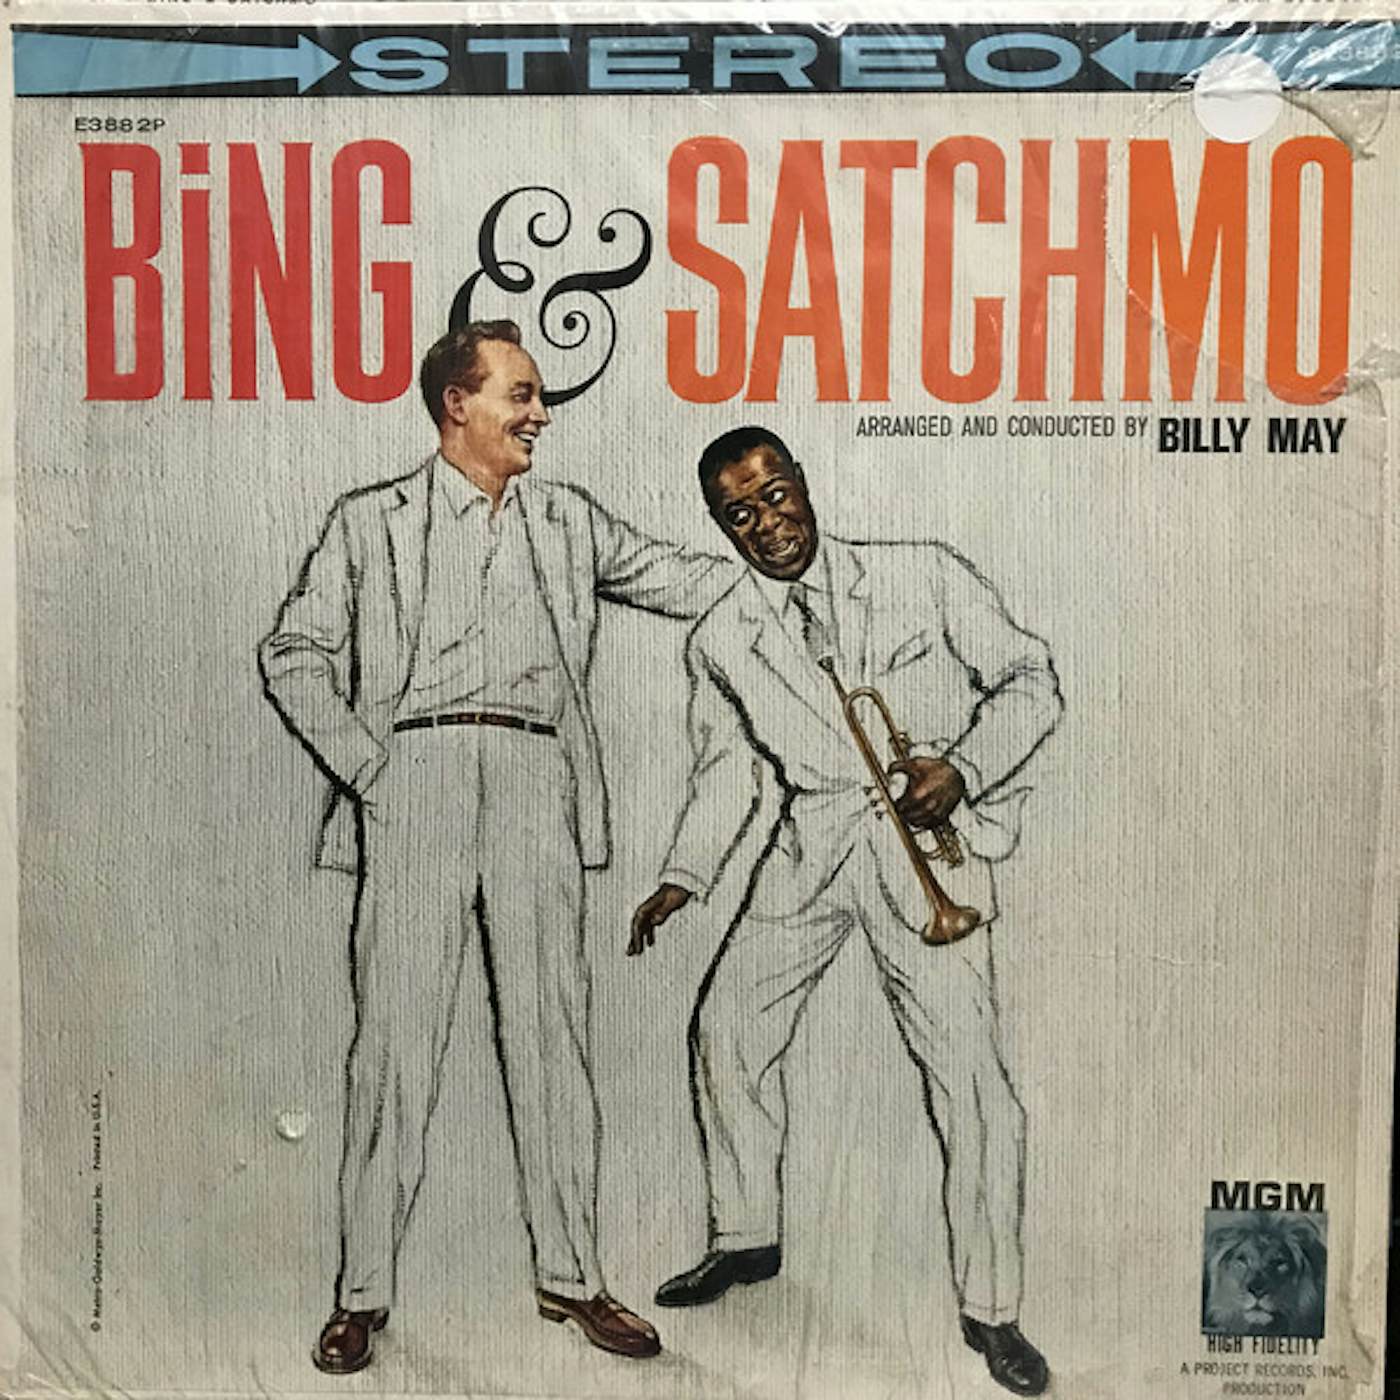 Bing Crosby & Louis Armstrong BING & SATCHMO Vinyl Record